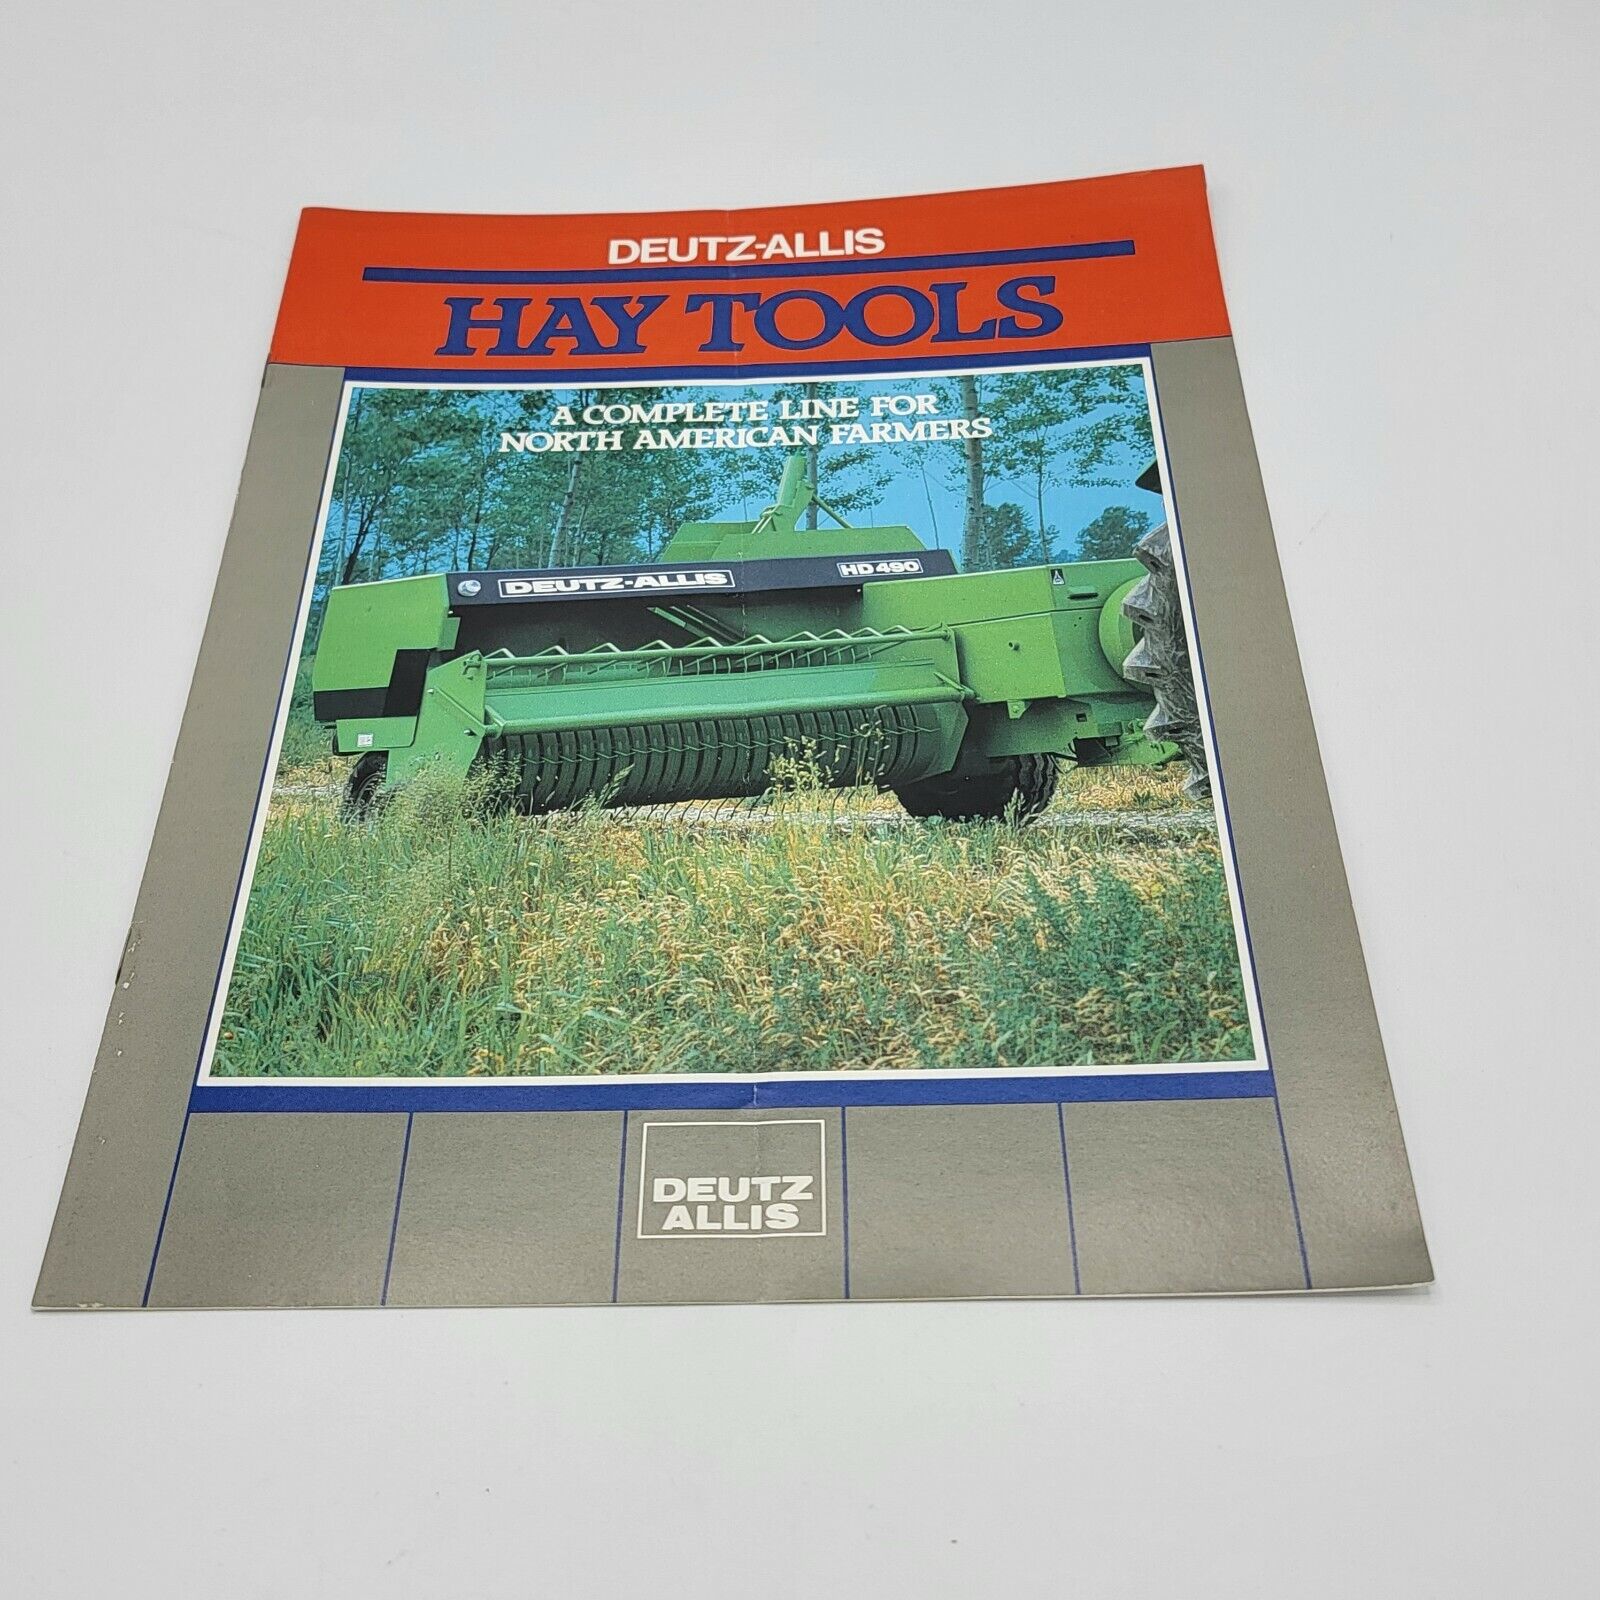 Deutz Allis Hay Tools HD 490 North American Farmers Implement   Brochure